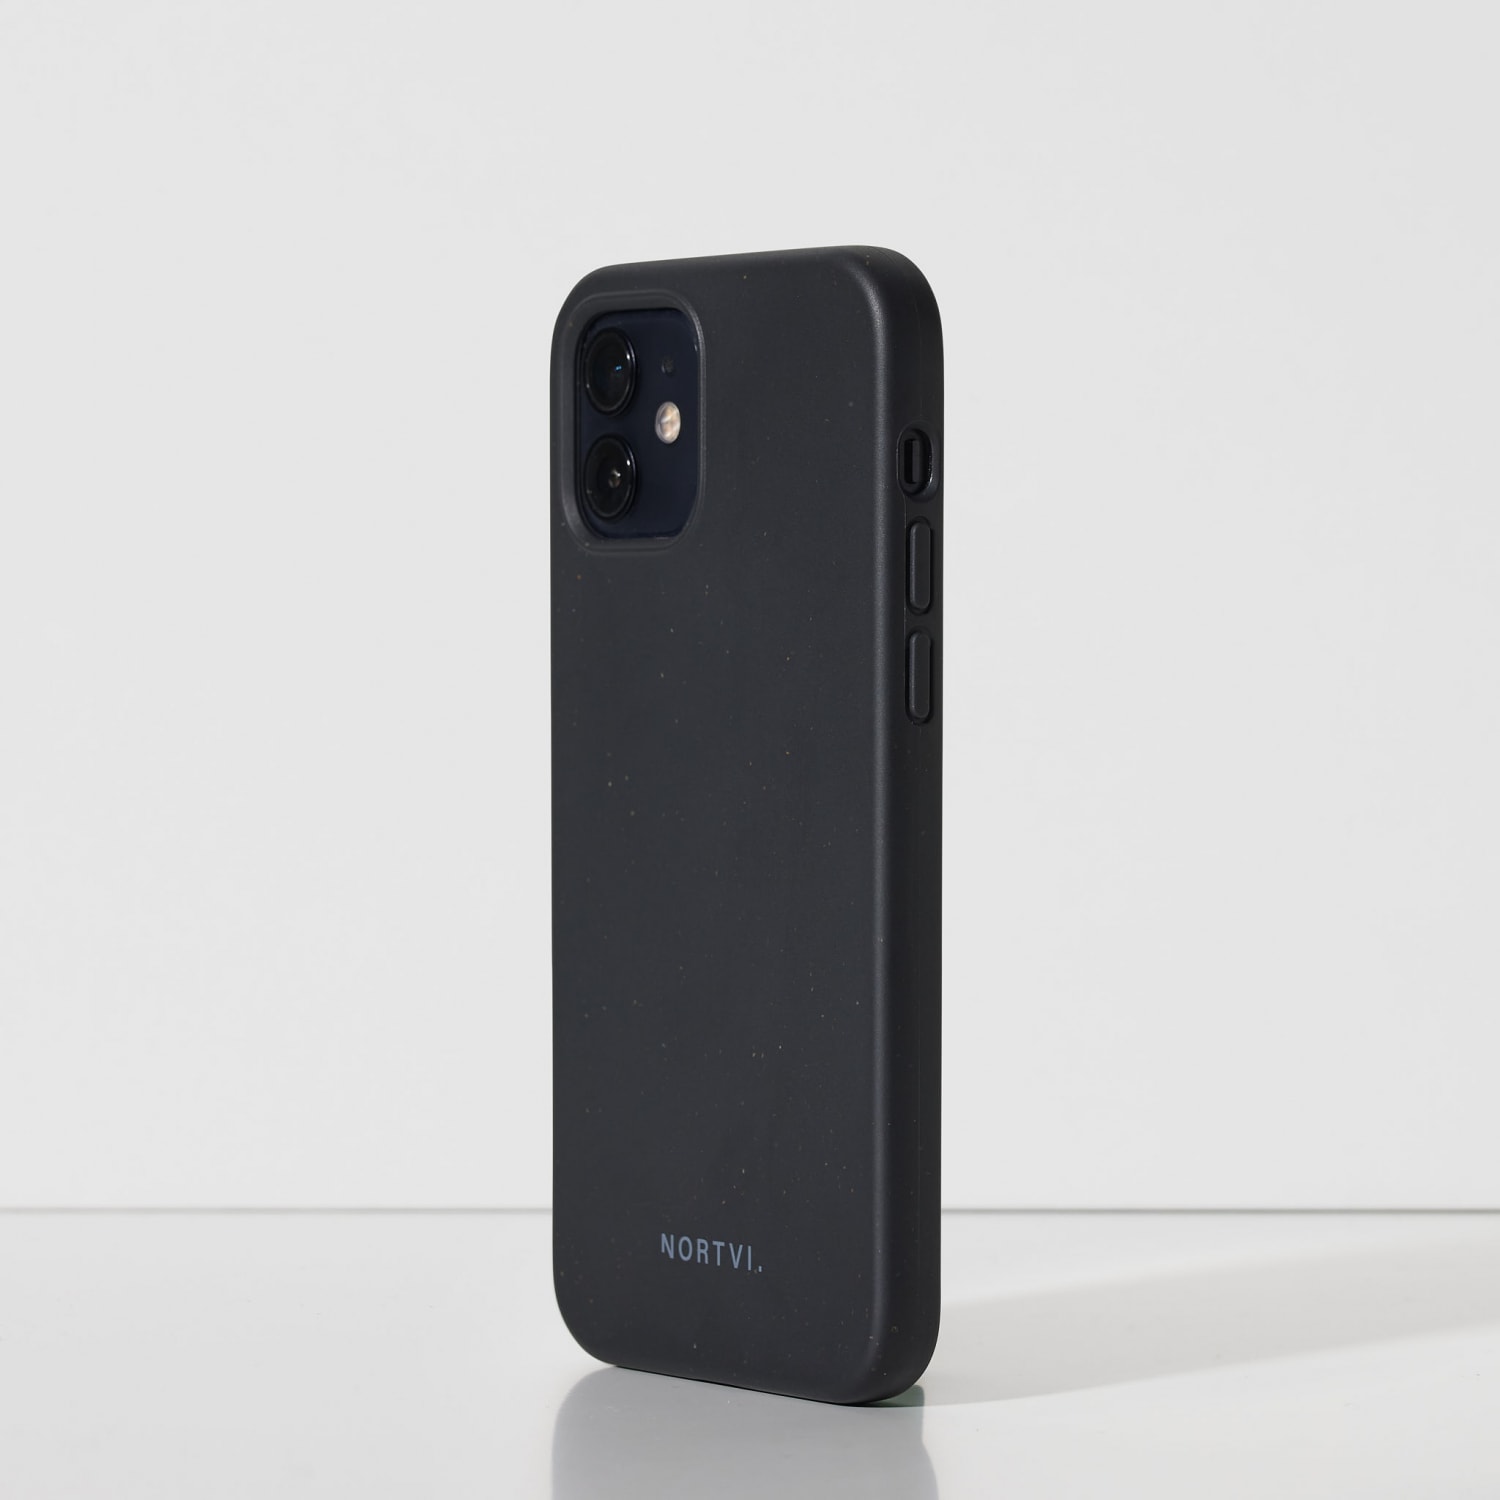 NORTVI black phone case for iPhone 12 case